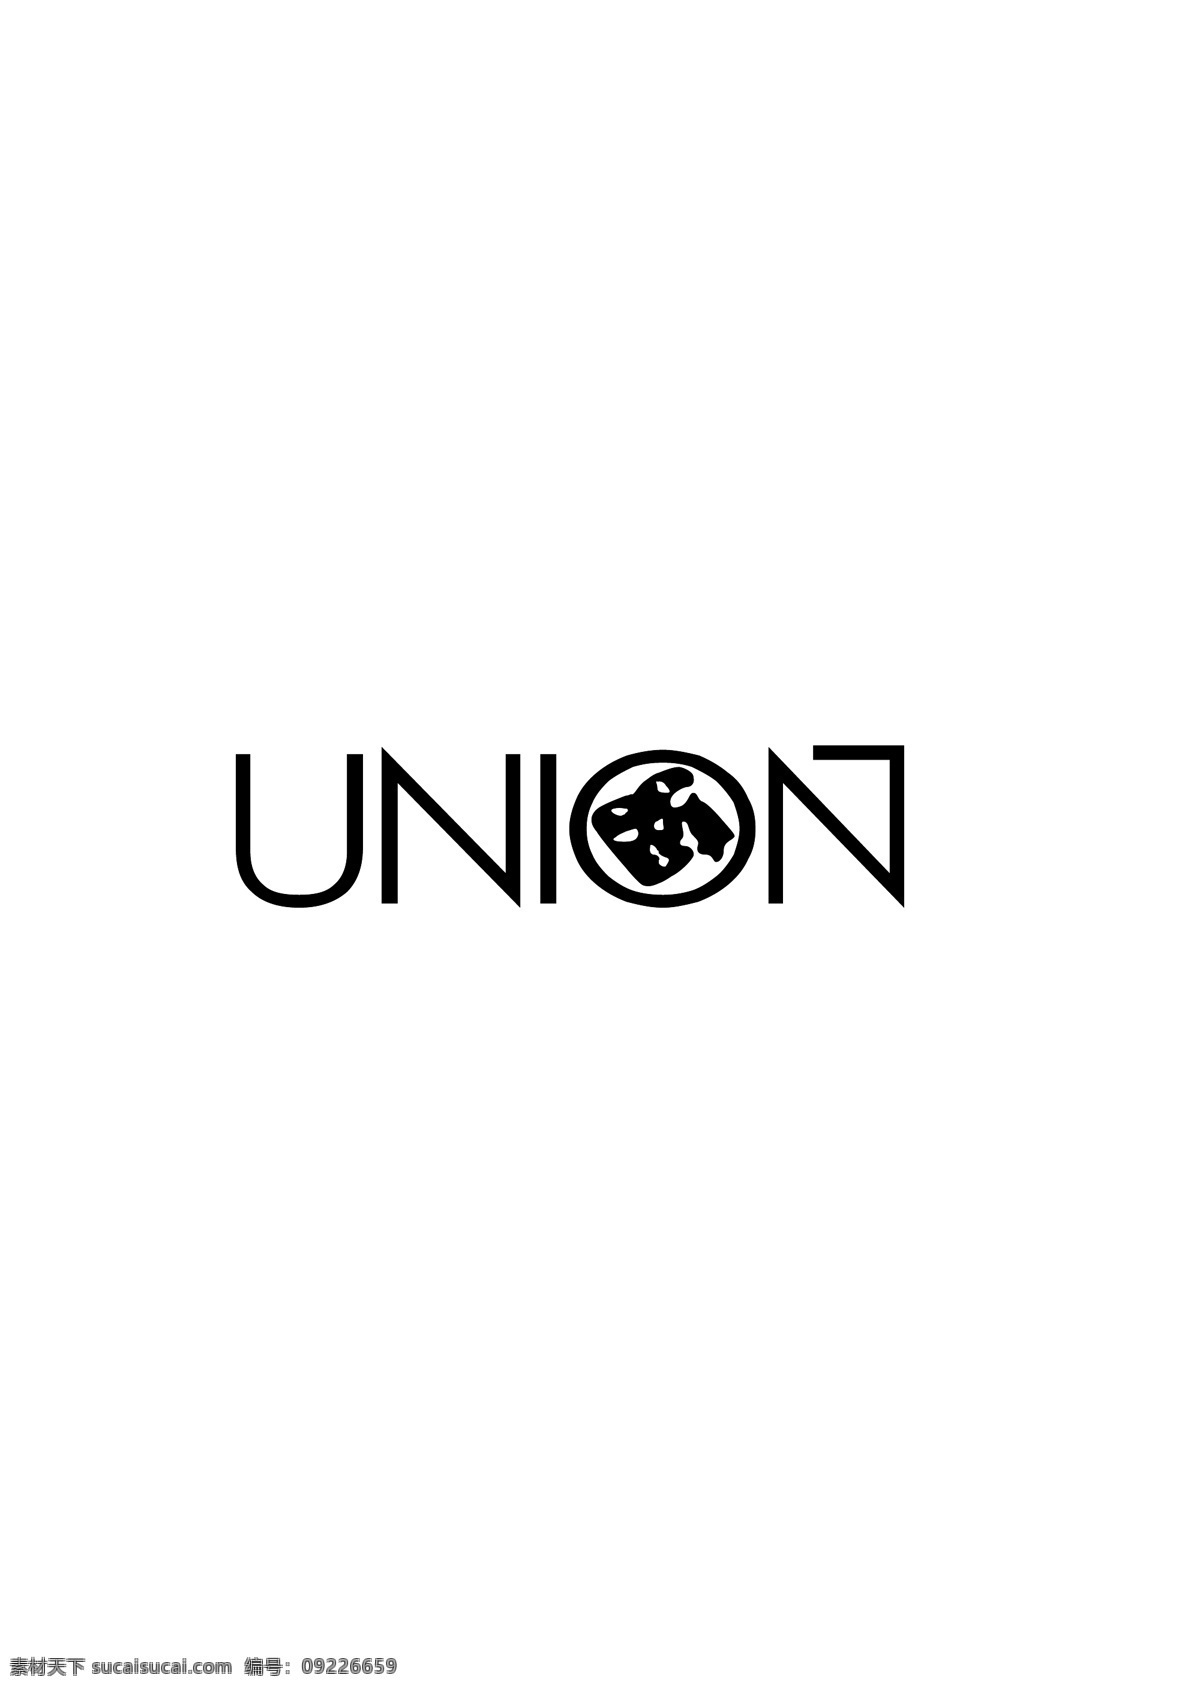 union logo大全 logo 设计欣赏 商业矢量 矢量下载 运动 赛事 标志设计 欣赏 网页矢量 矢量图 其他矢量图